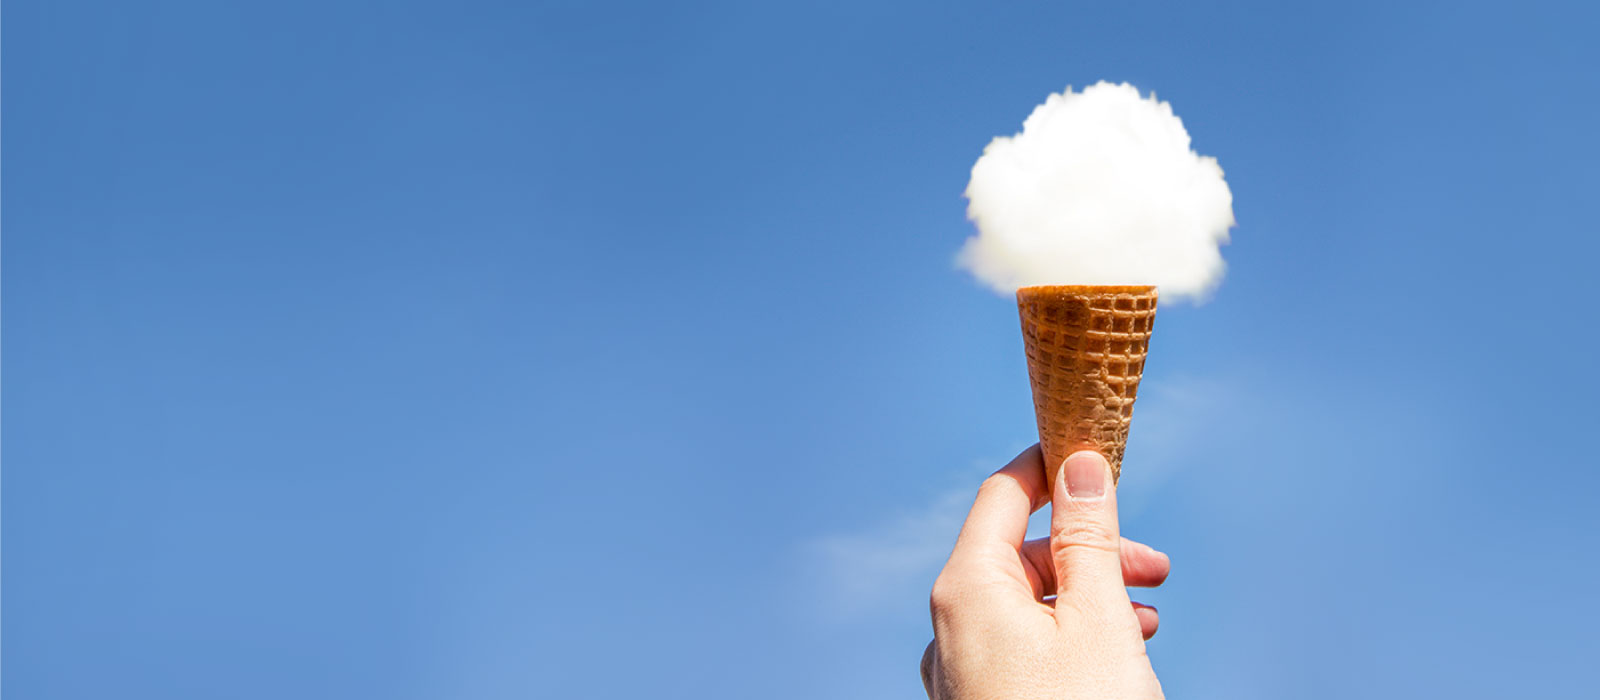 Cloud on ice cream cone